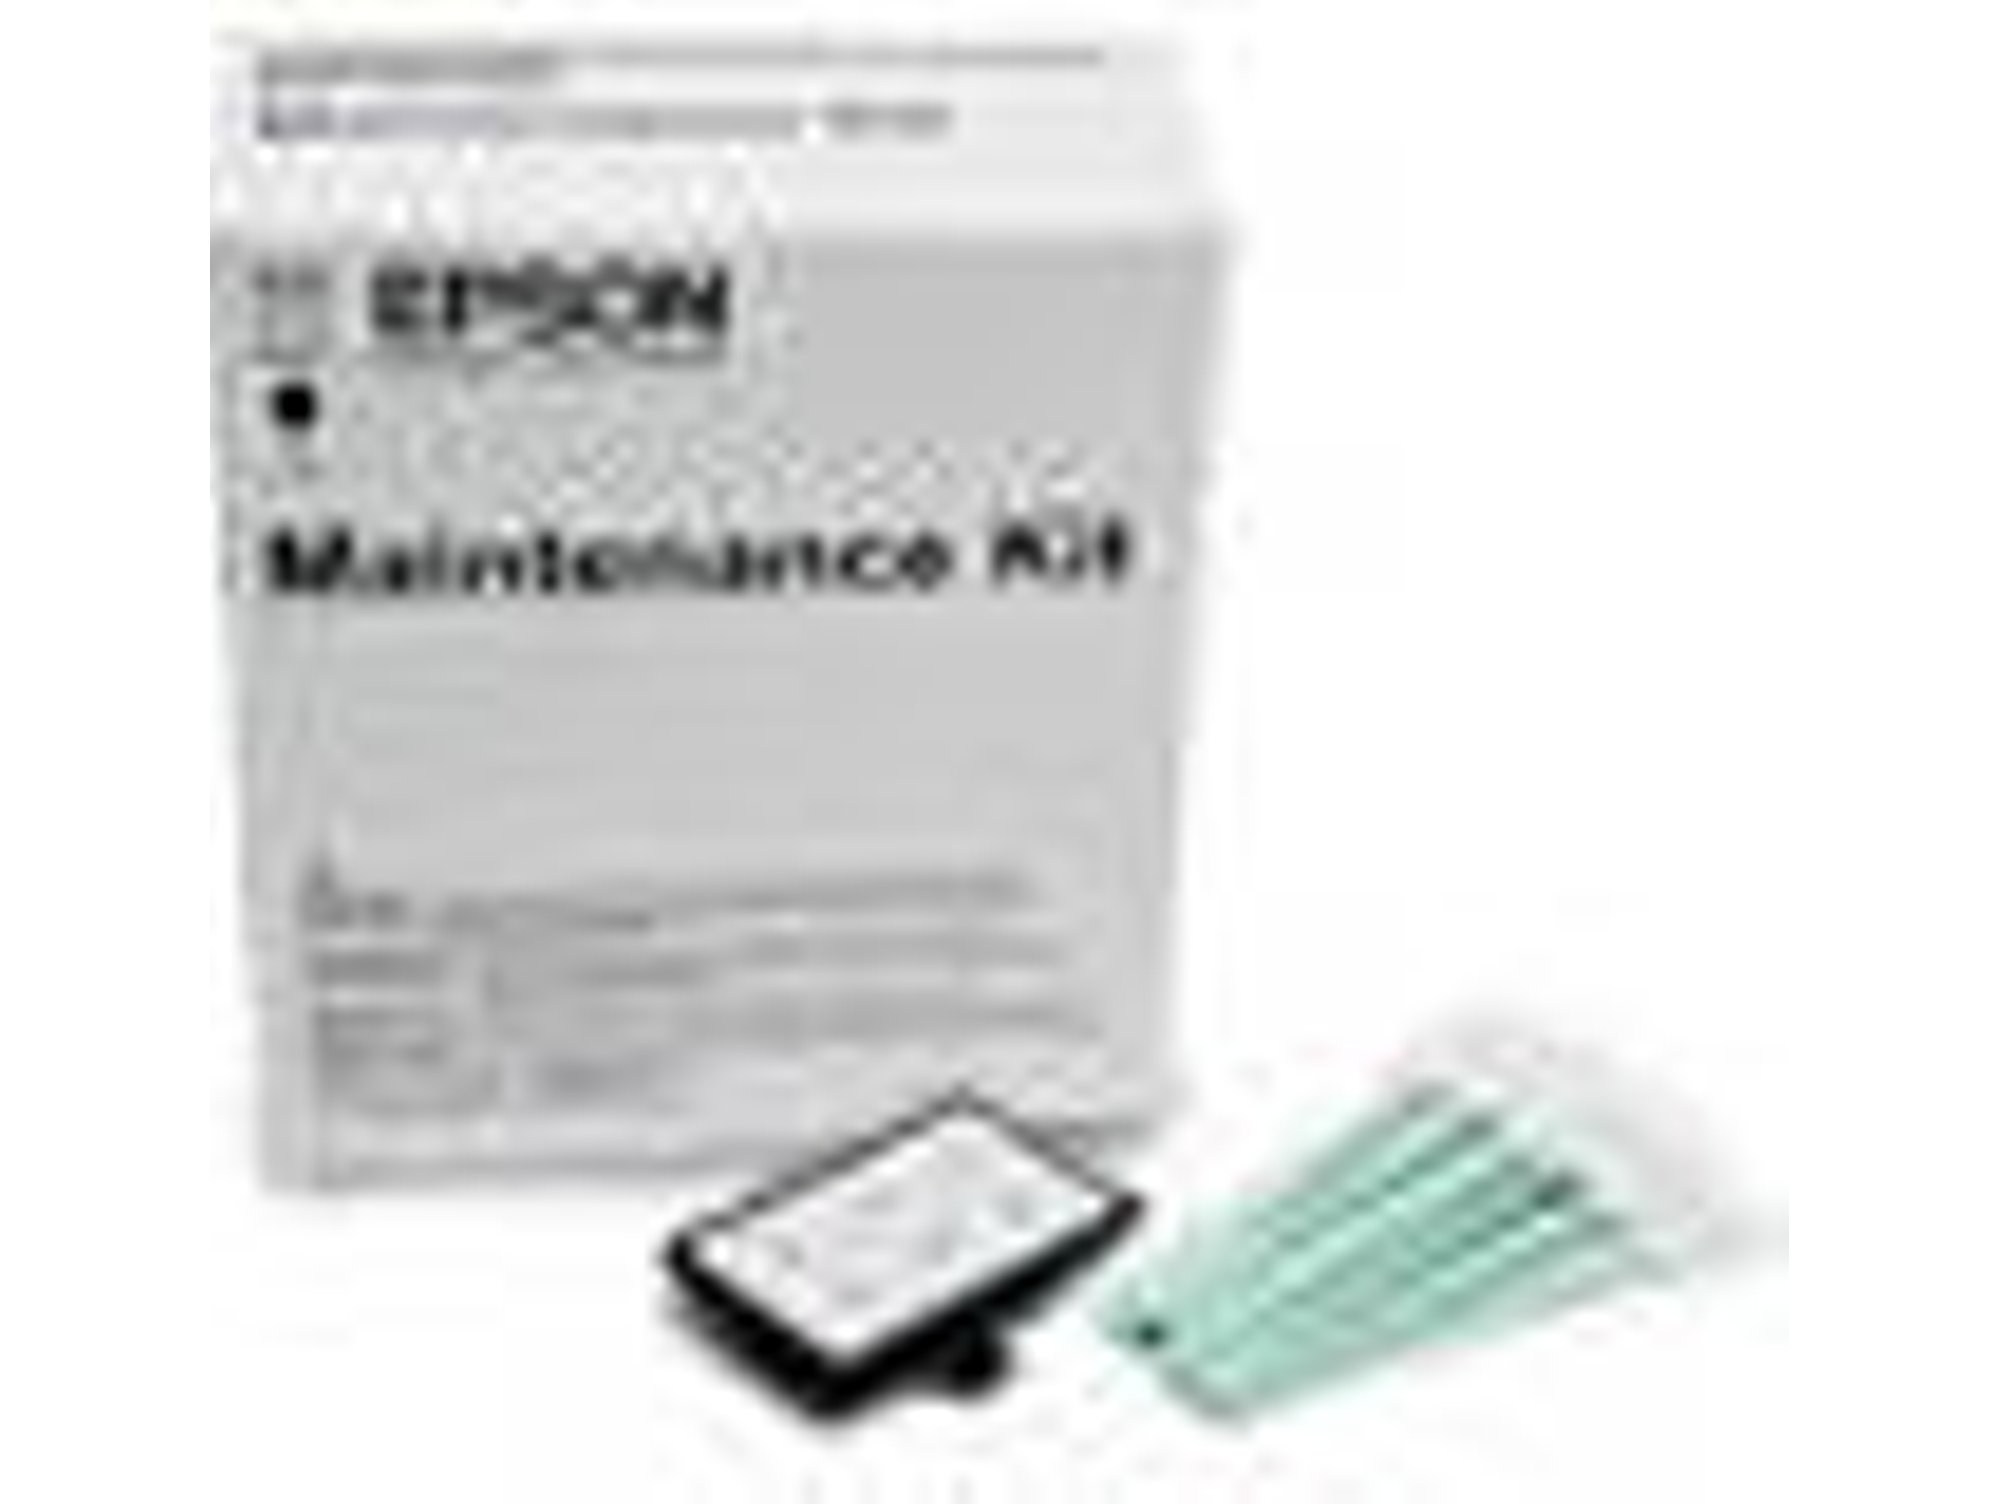 Epson C12c890611 Kit de mantenimiento gs6000 accesorios para impresora